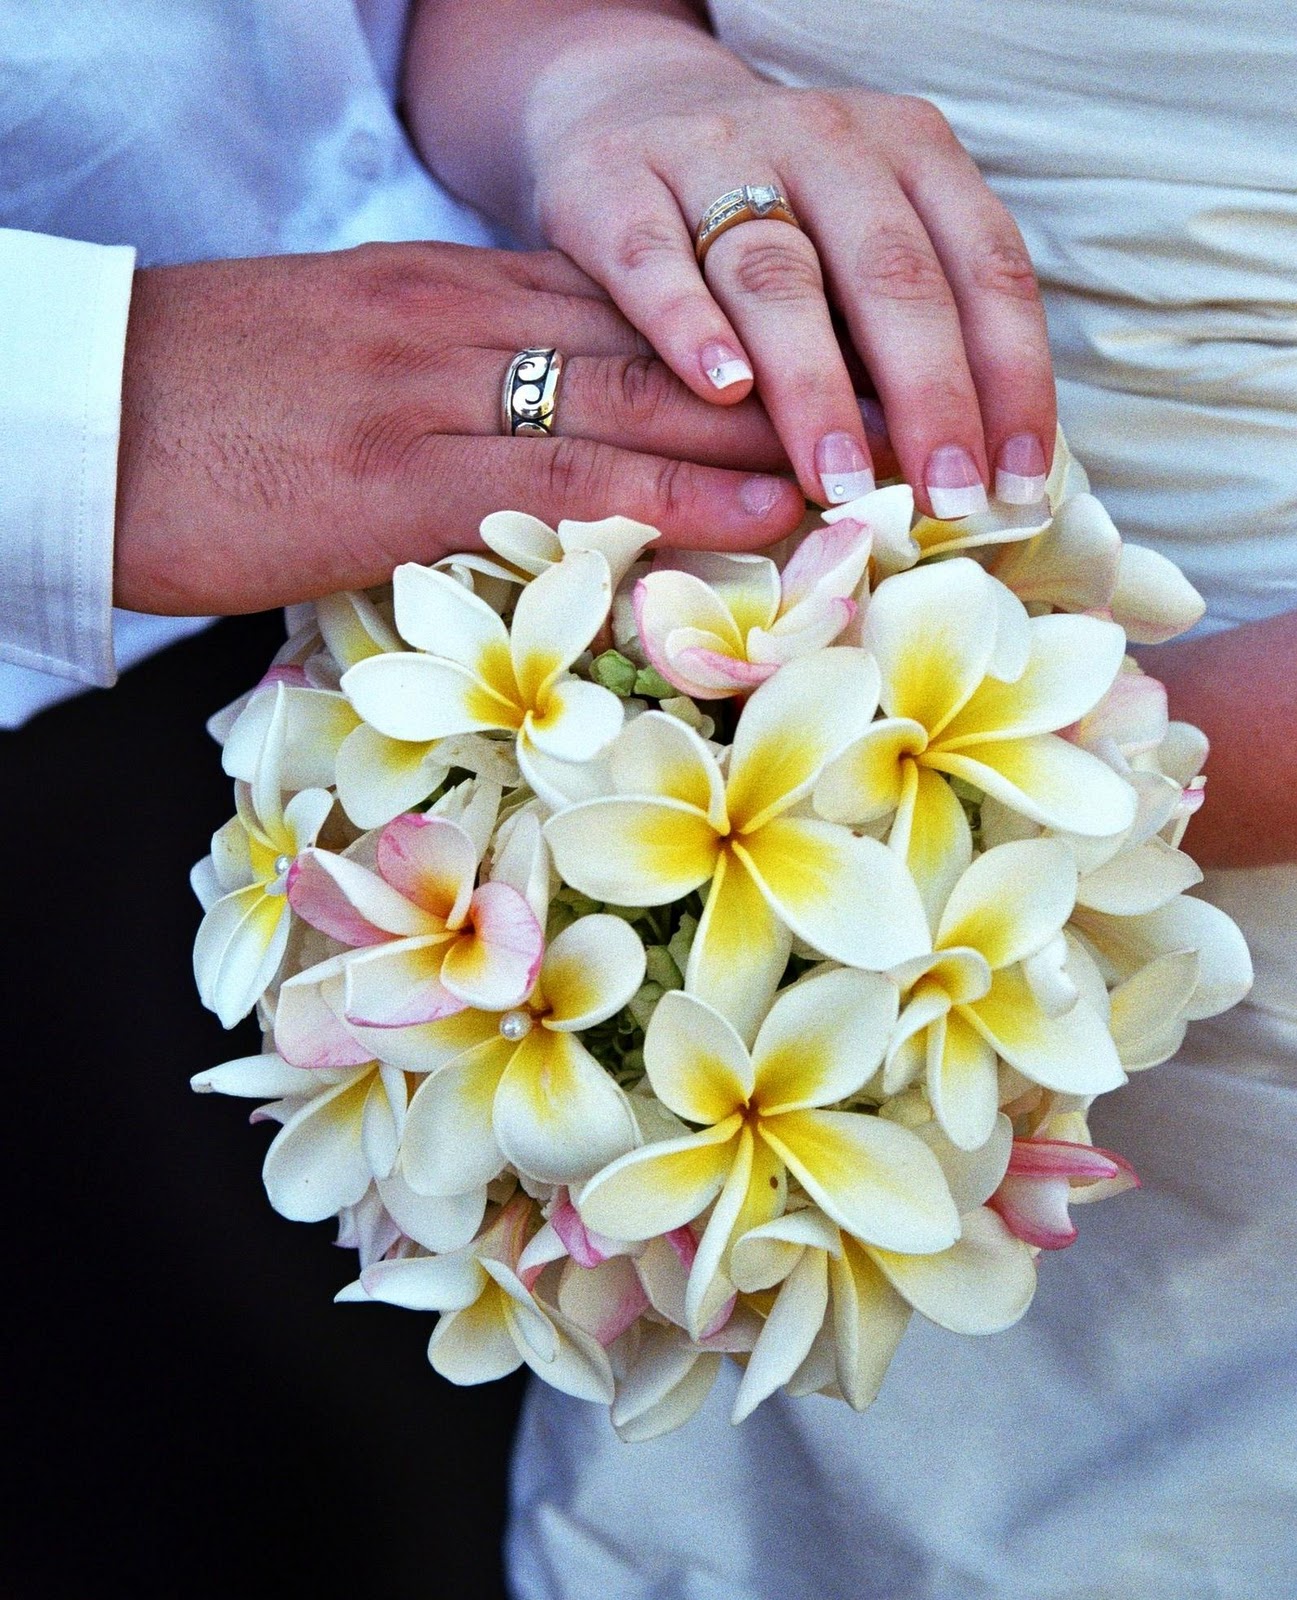 Tags: bridal, bridal bouquet,